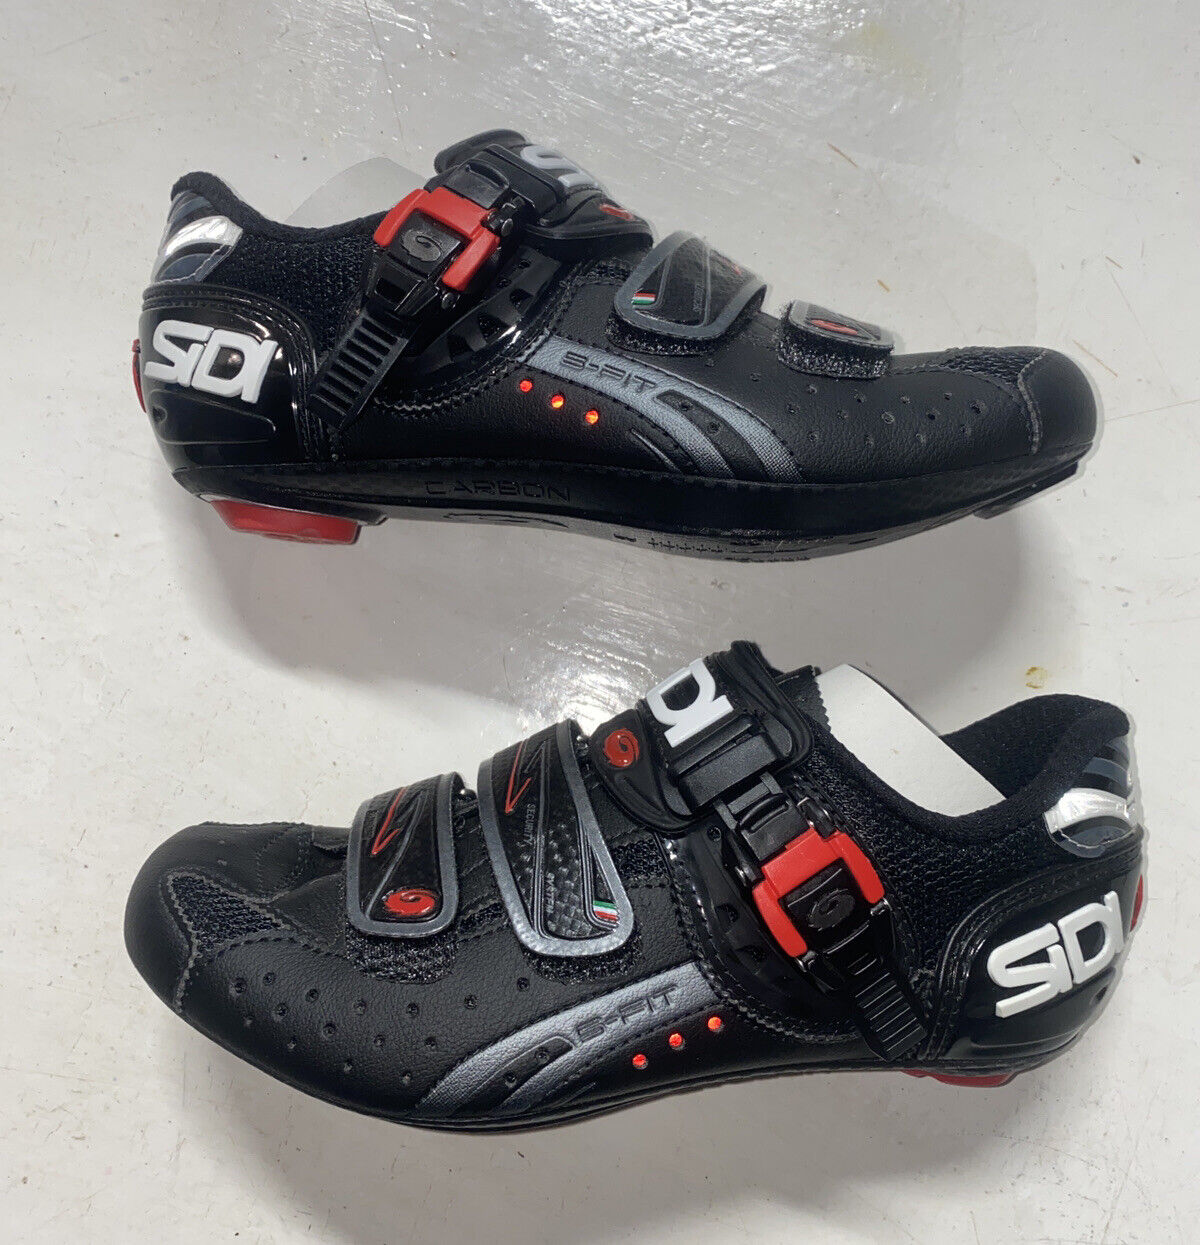 New Sidi Genius Fit Carbon Road Bike Cycling Shoes Size US 5.5 EU 38 Black